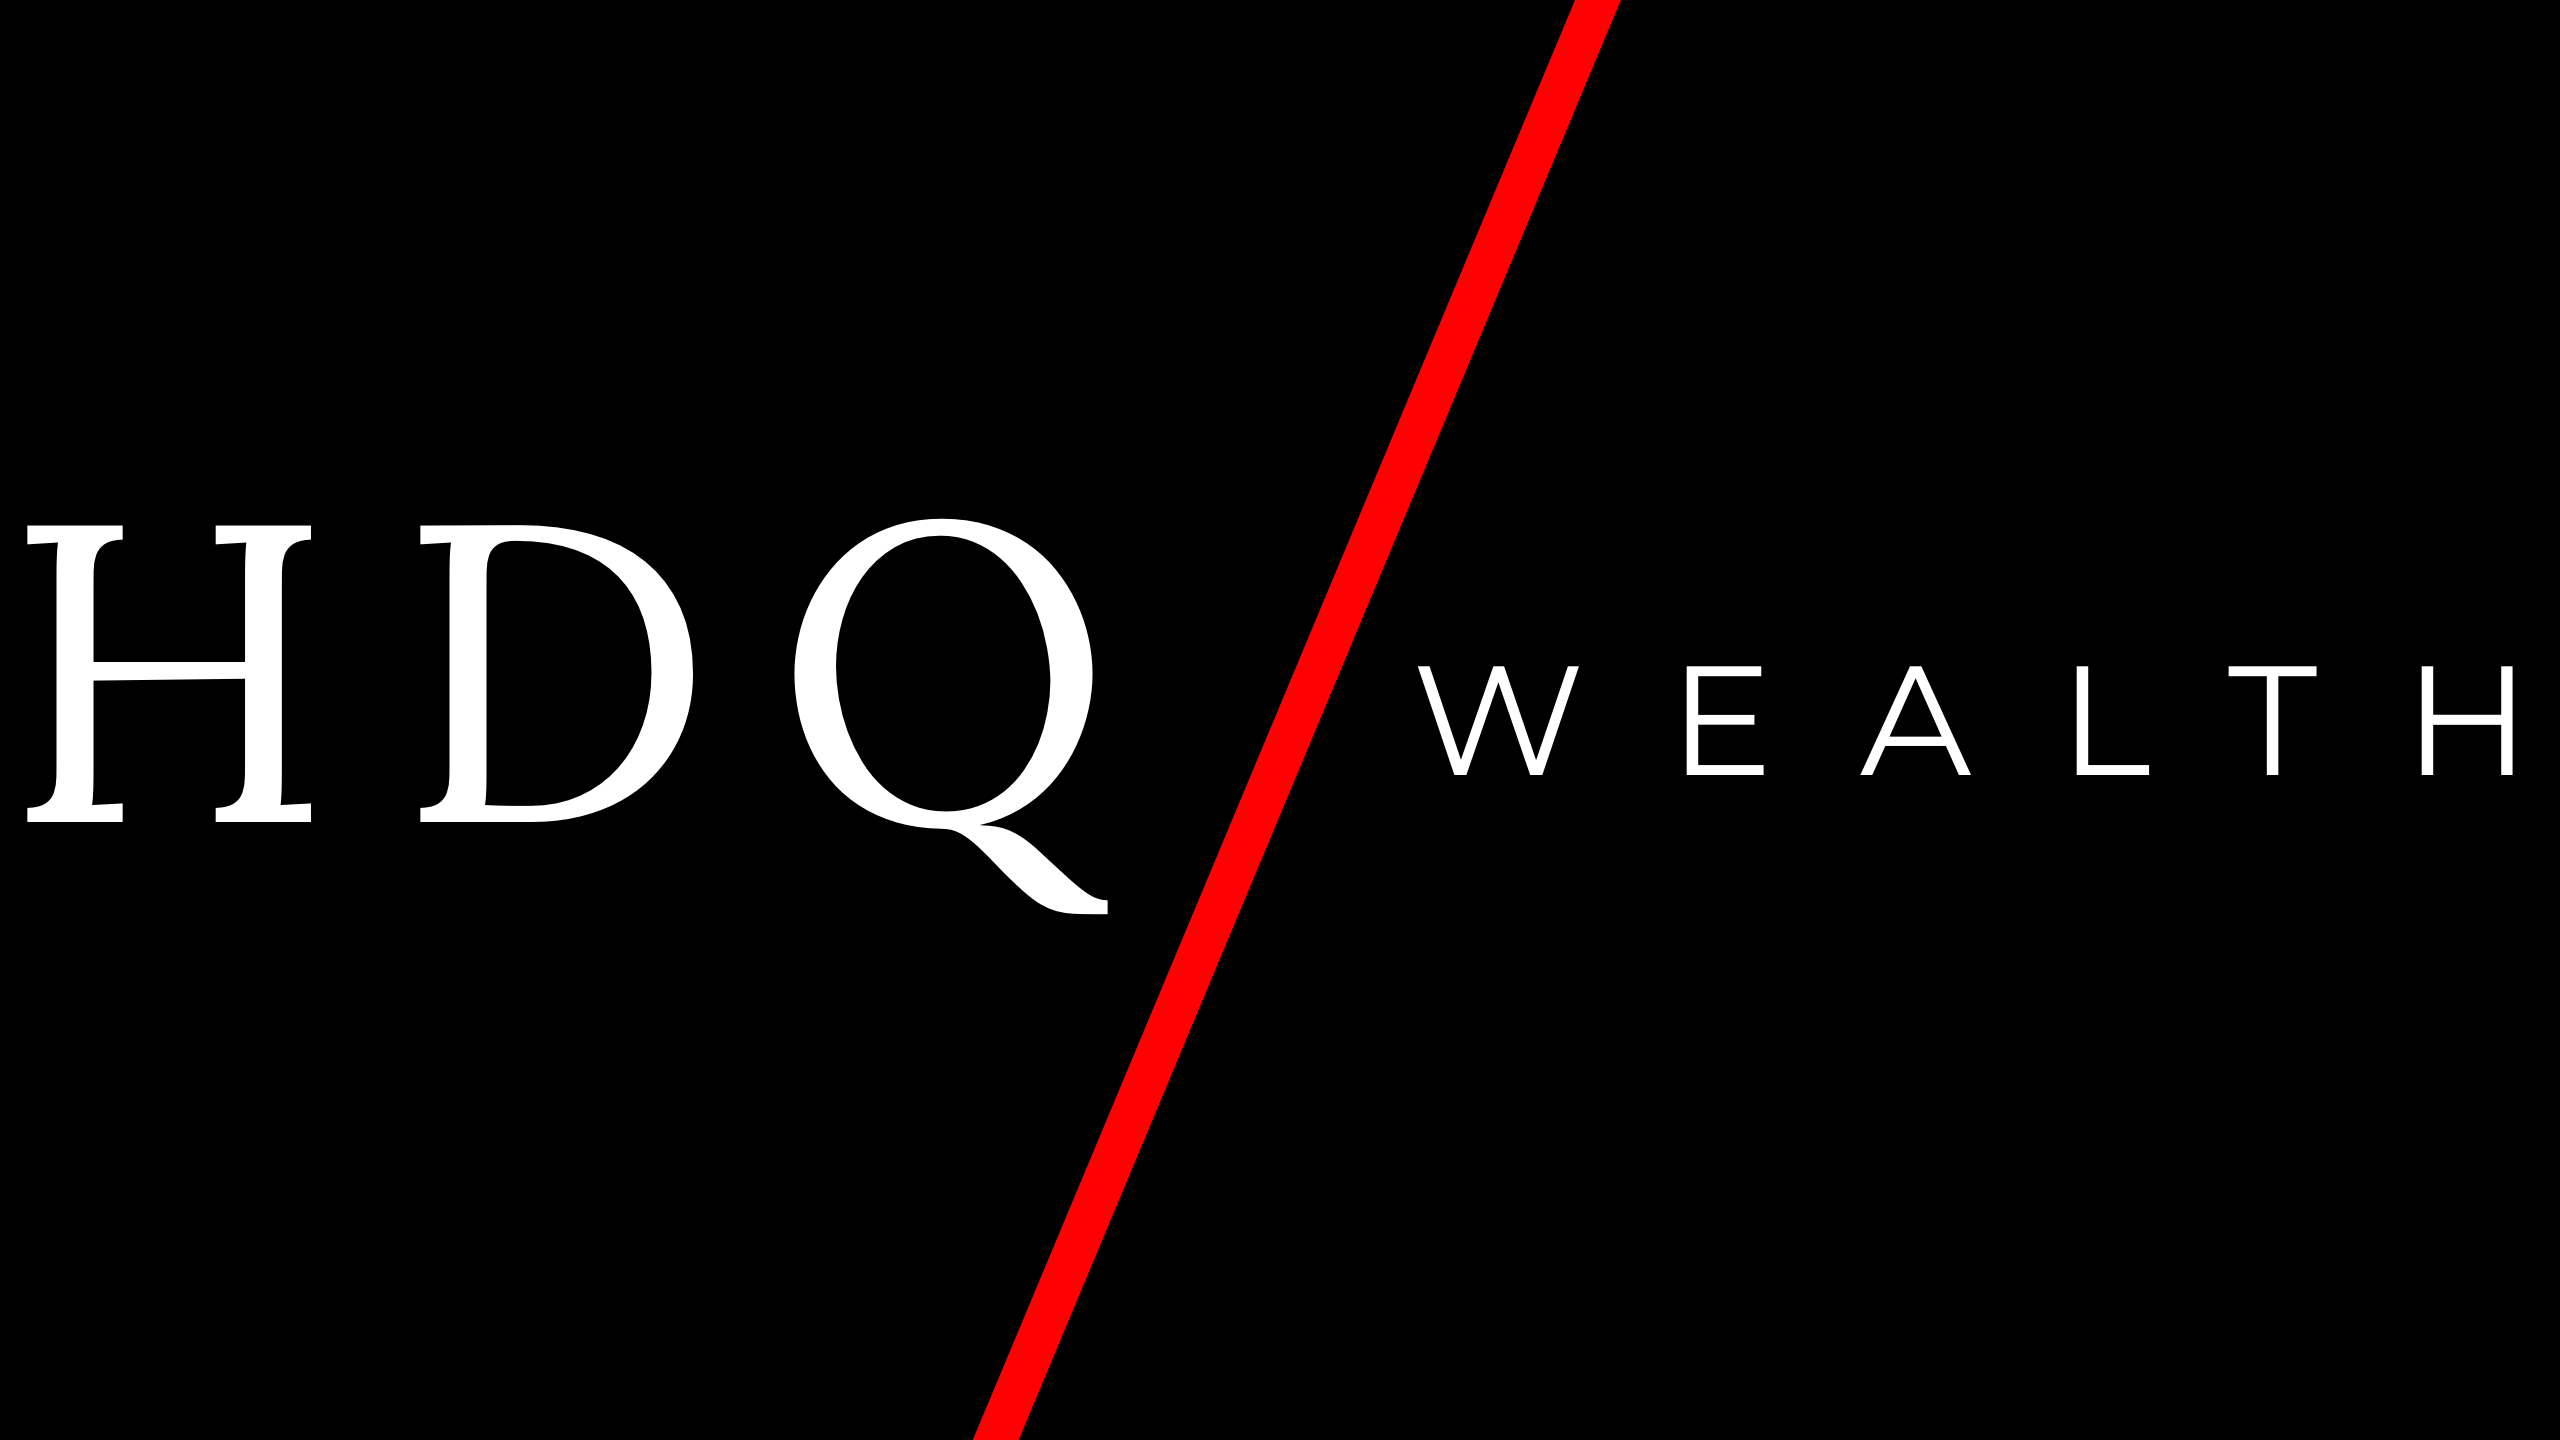 HDQ Wealth logo